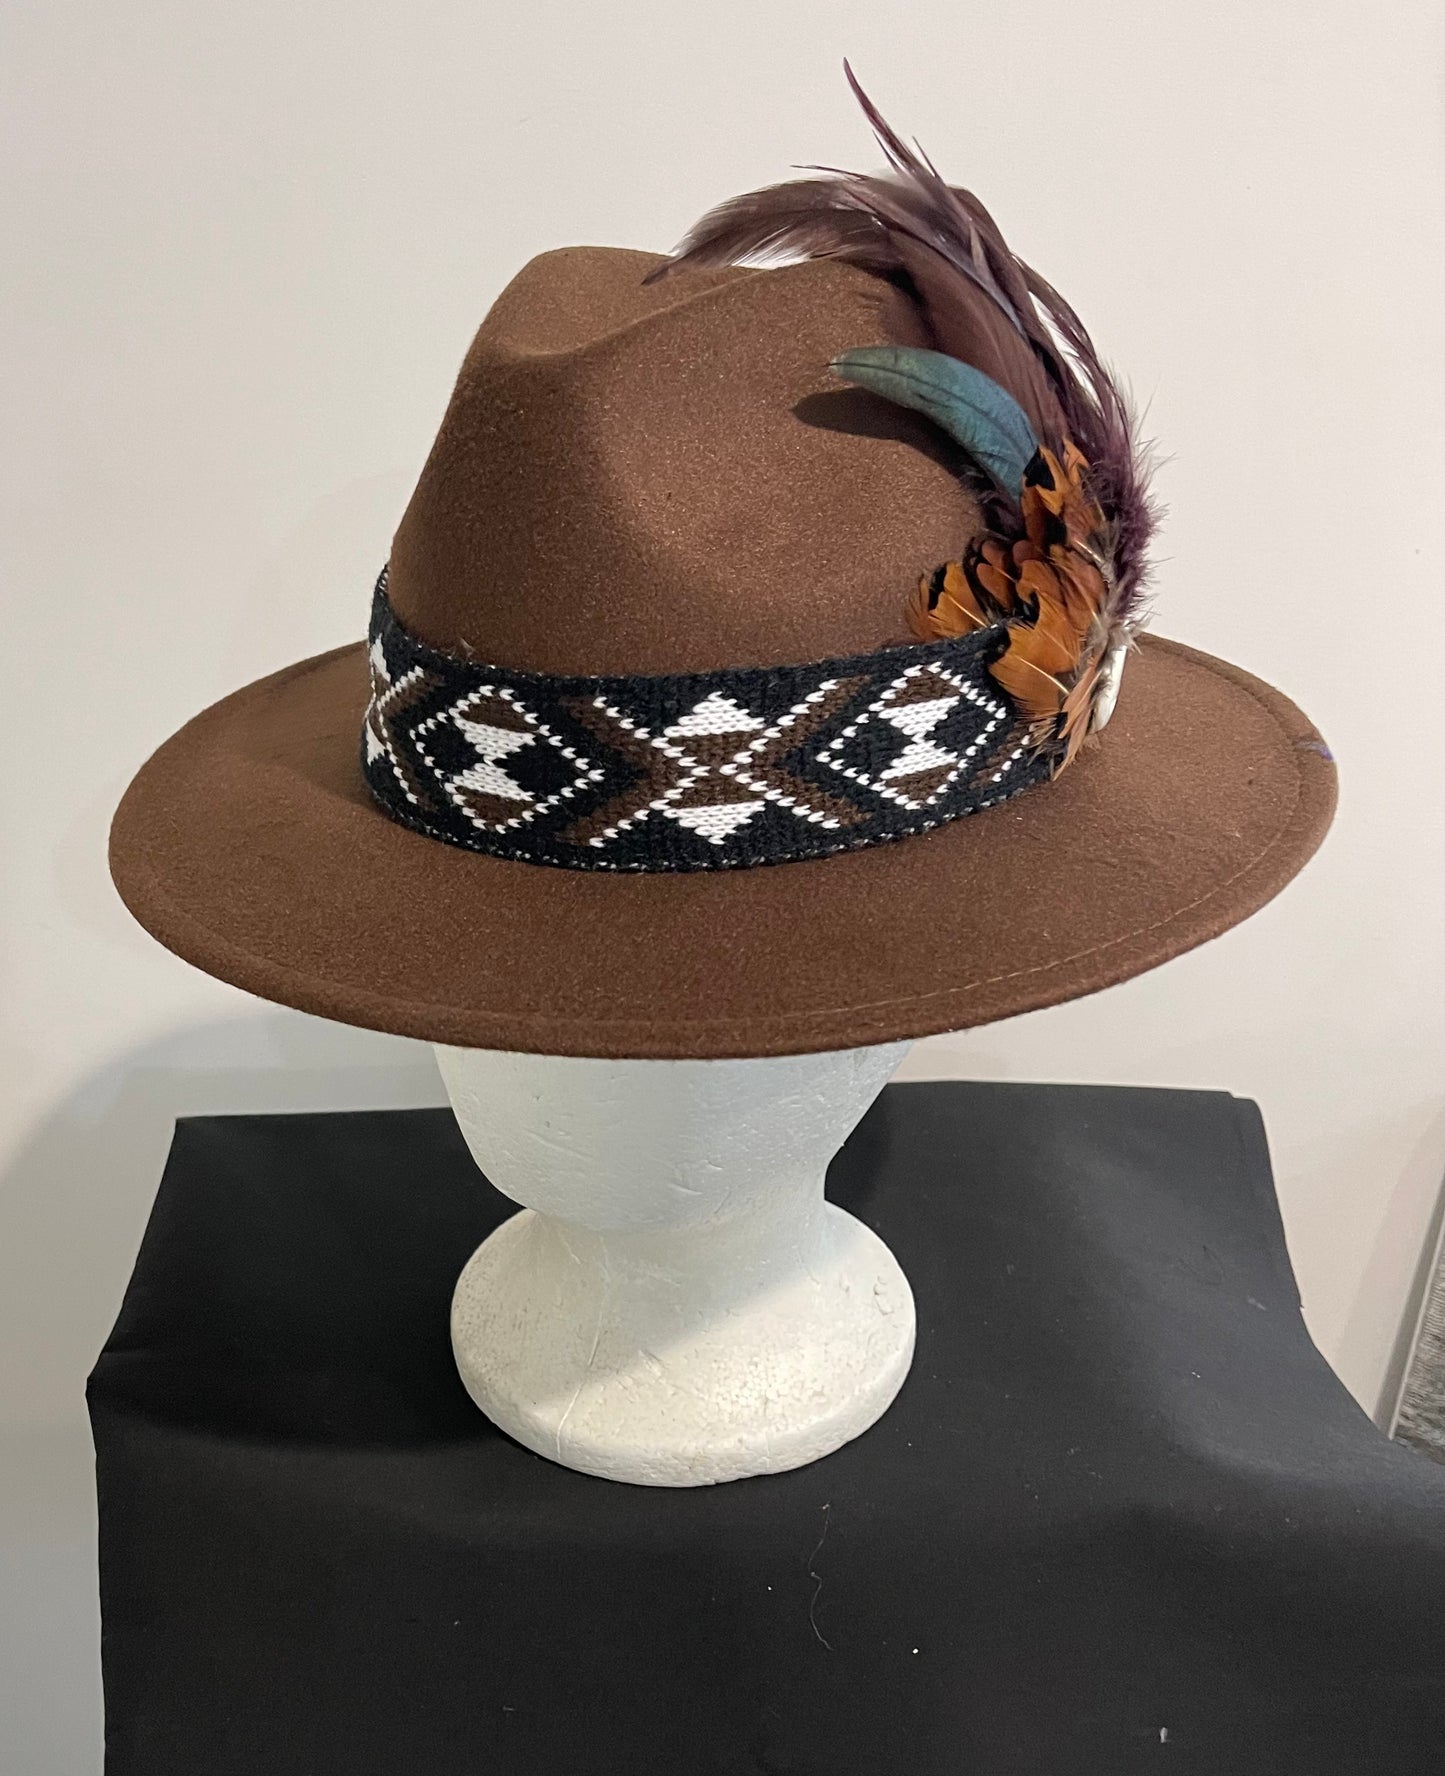 Potae - Chocolate Fedora Felt Hat